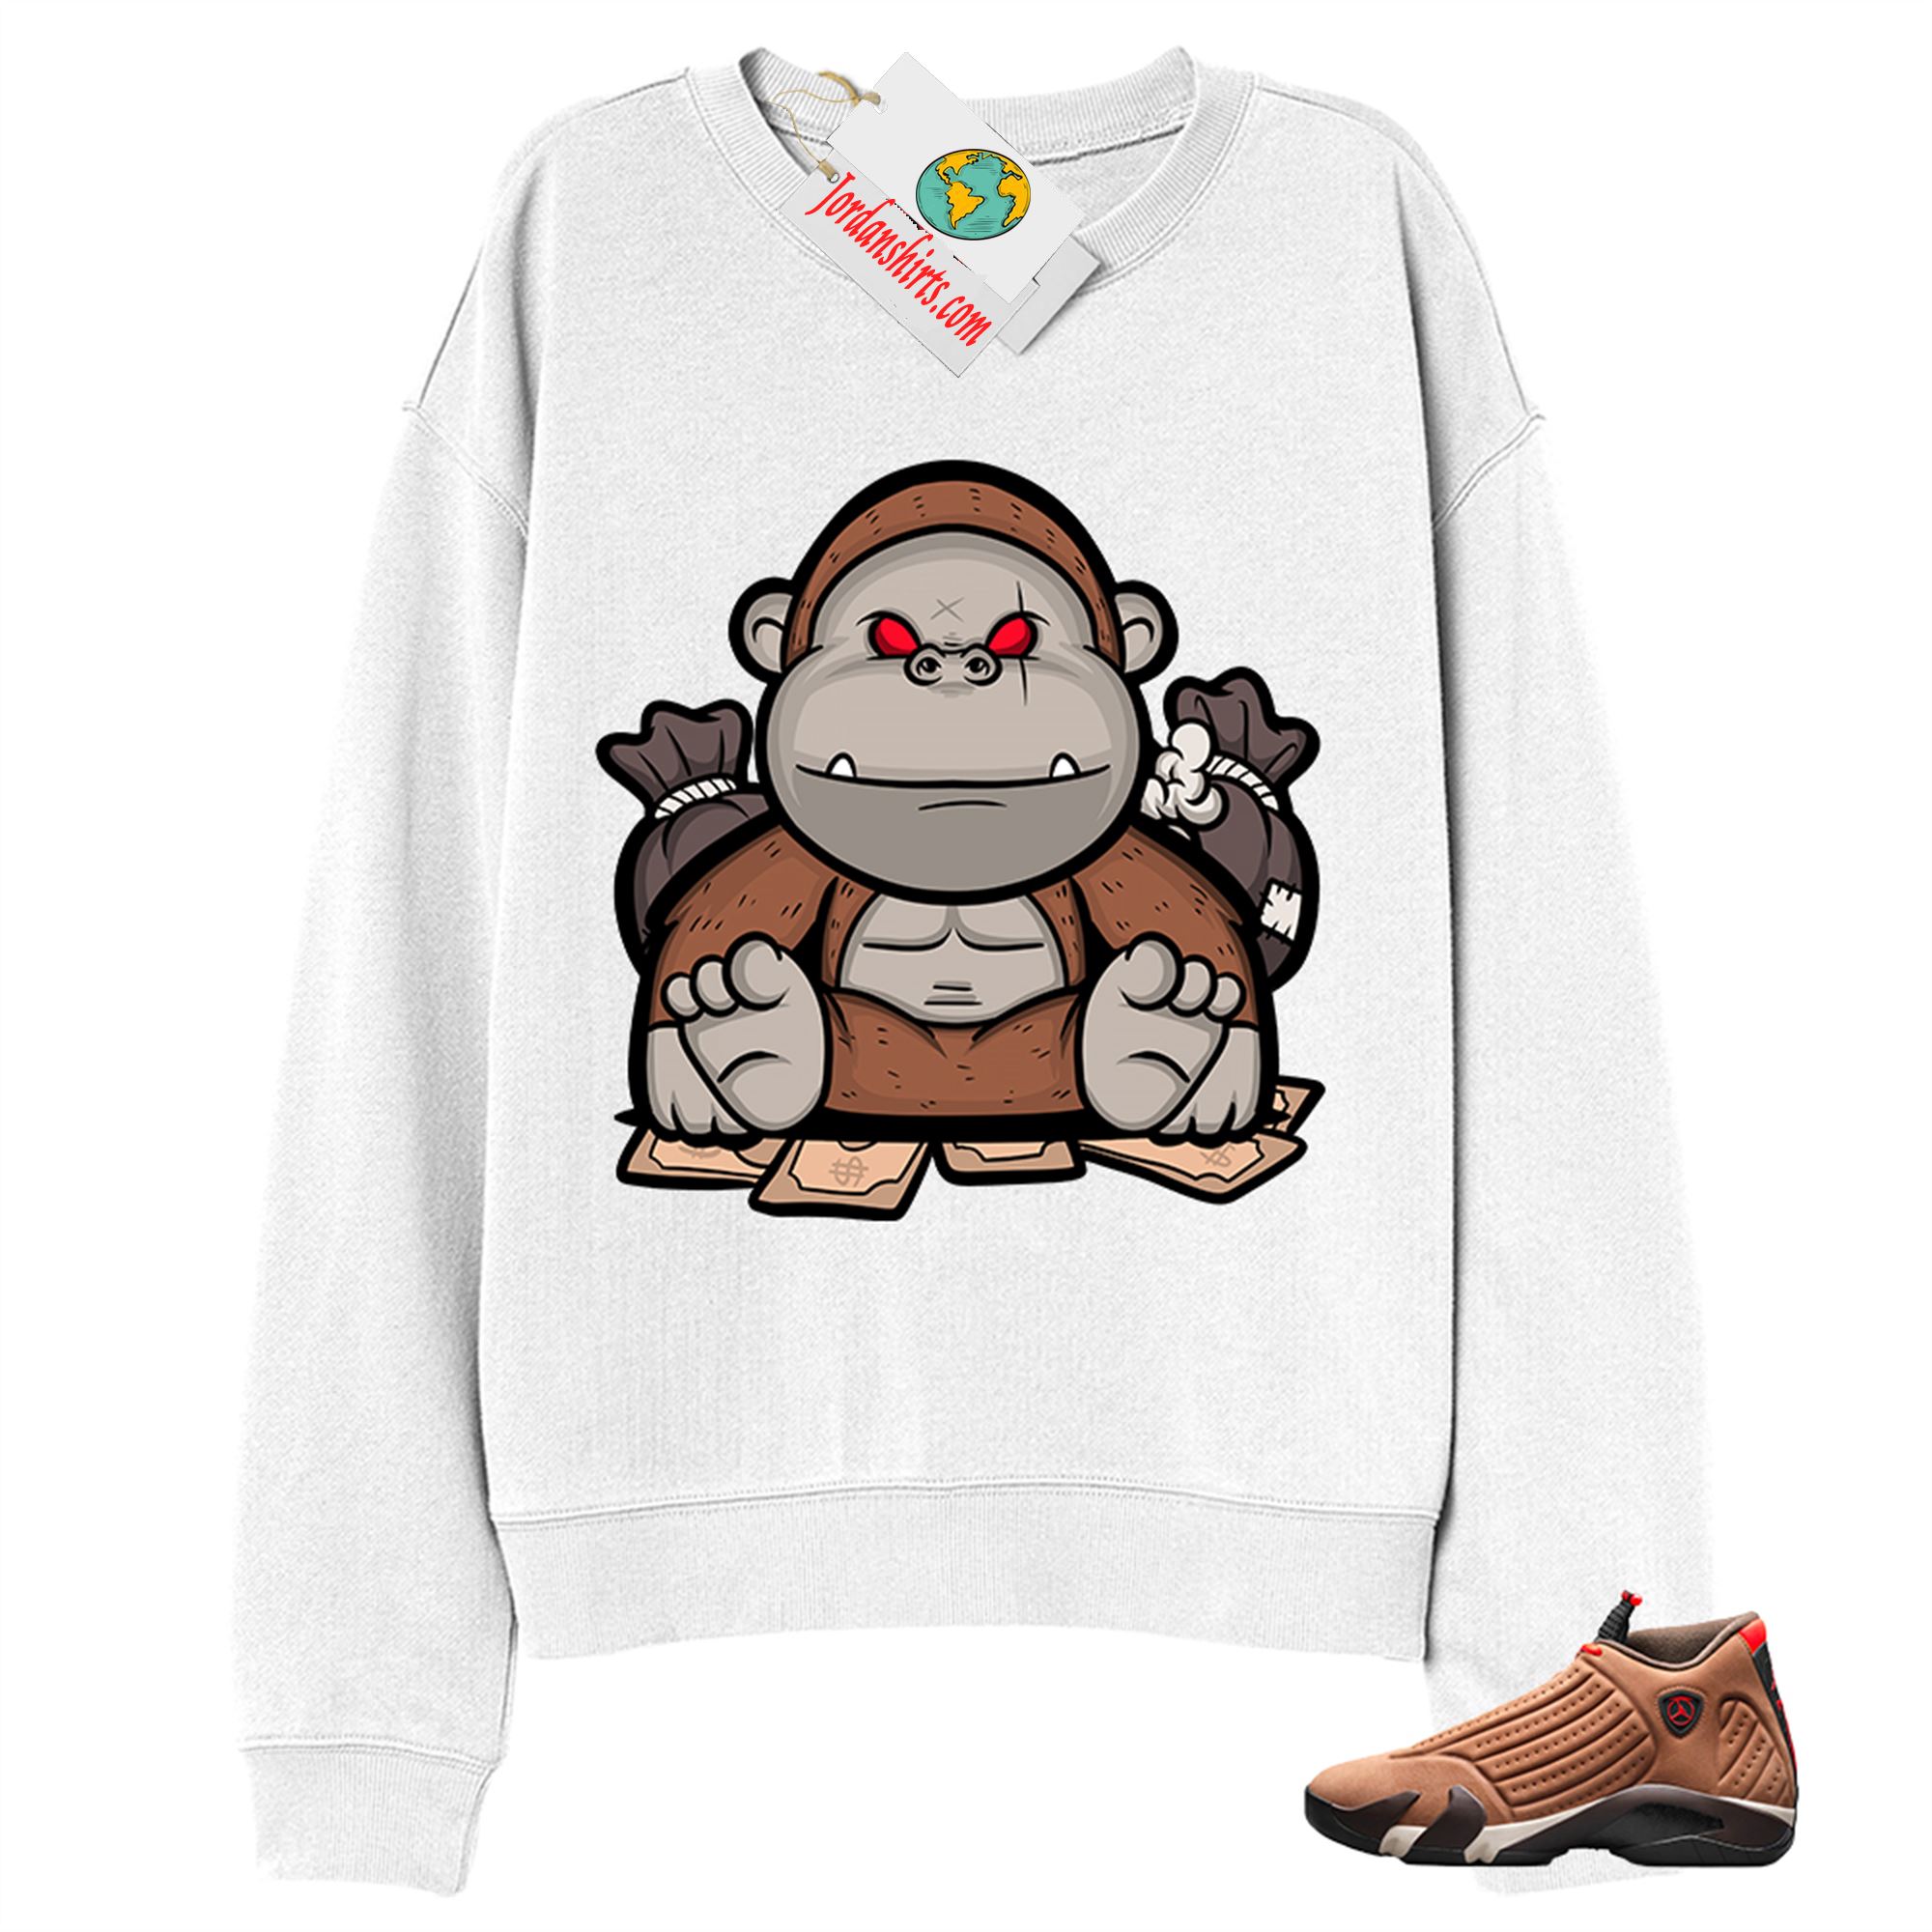 Jordan 14 Sweatshirt, Rich Gorilla With Money White Sweatshirt Air Jordan 14 Winterized 14s Plus Size Up To 5xl